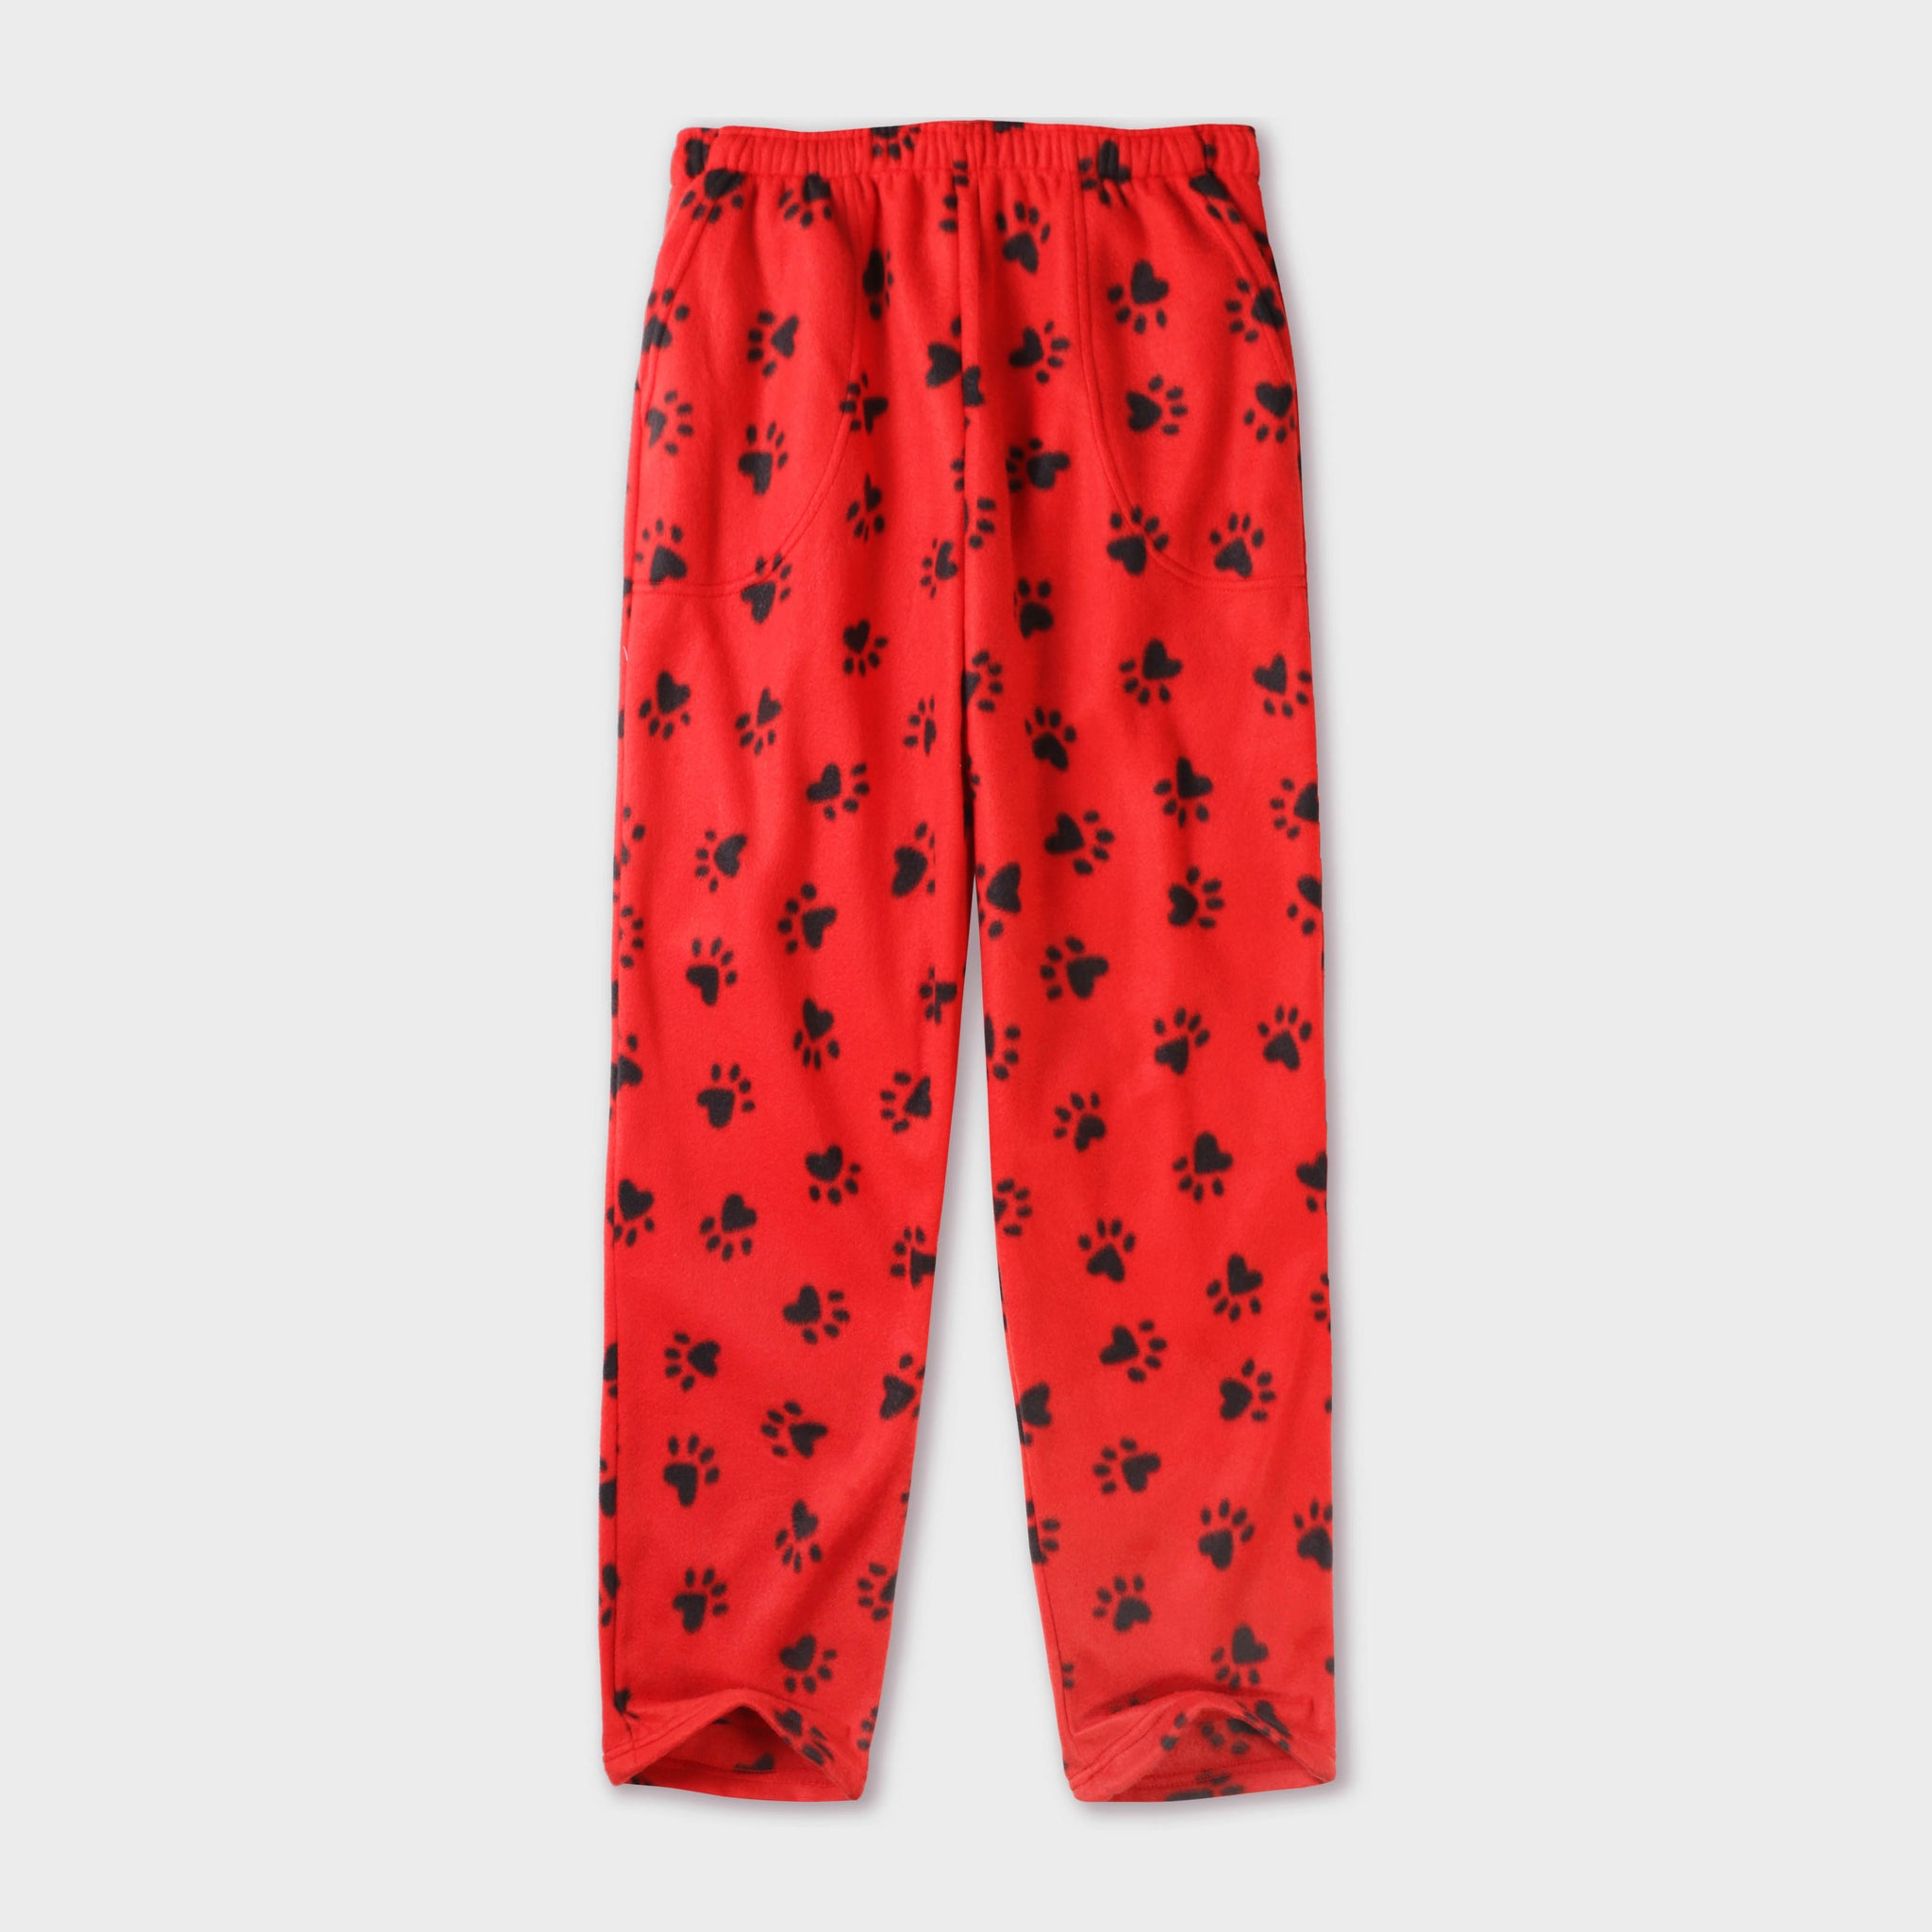 pajama pants_mens pajama pants_mens lounge pants_old navy pajama pants_pajama bottoms_pj pants_fuzzy pajama pants_family pajama pants_Red/Black Paw